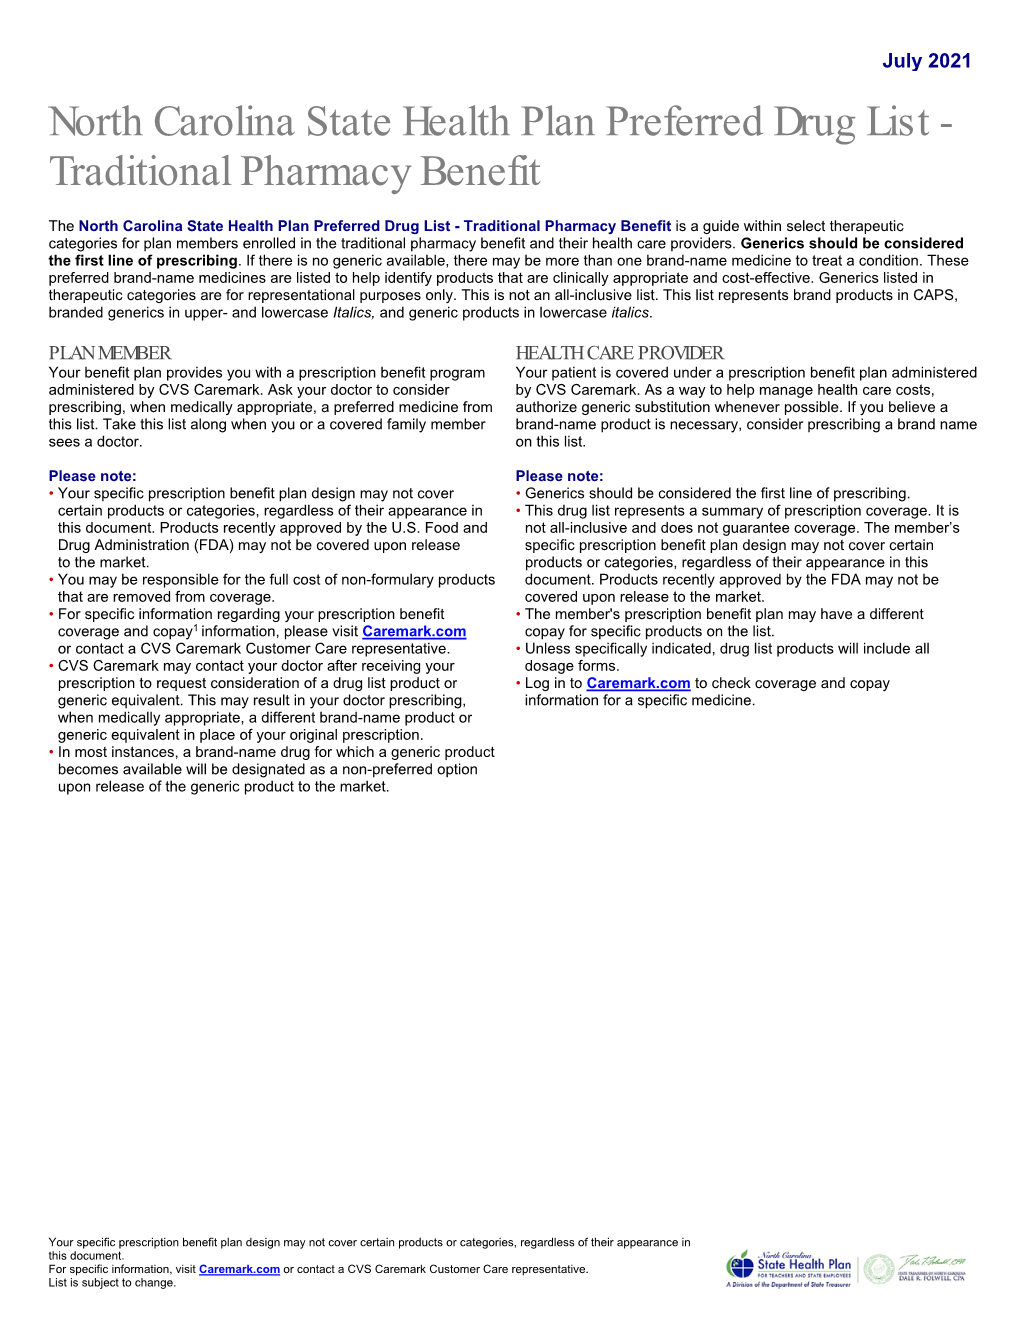 North Carolina State Health Plan Preferred Drug List - Traditional Pharmacy Benefit